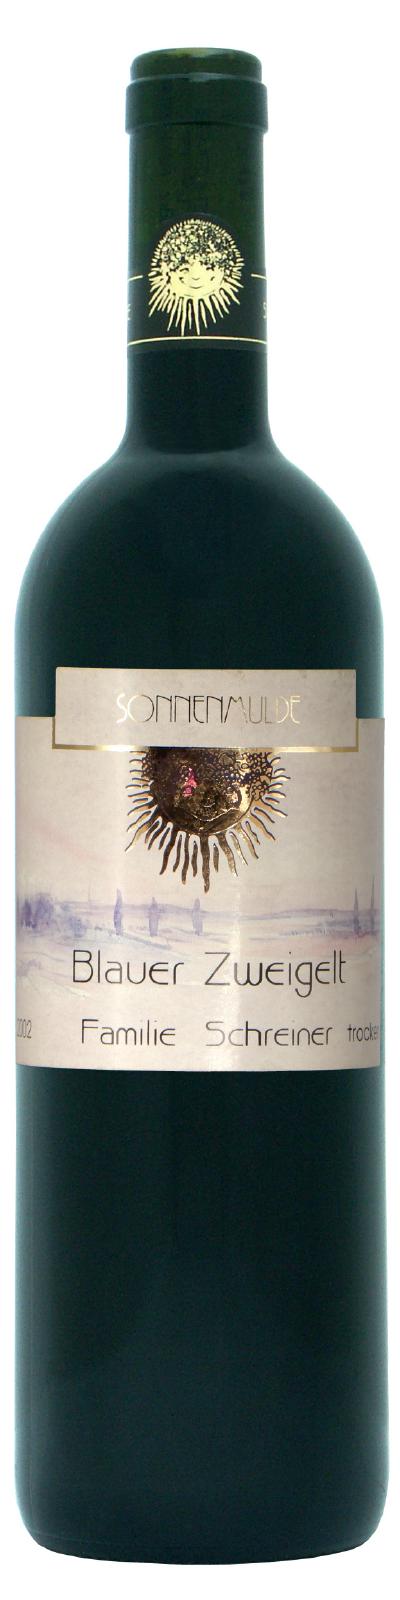 A bottle of Blauer Zweigelt